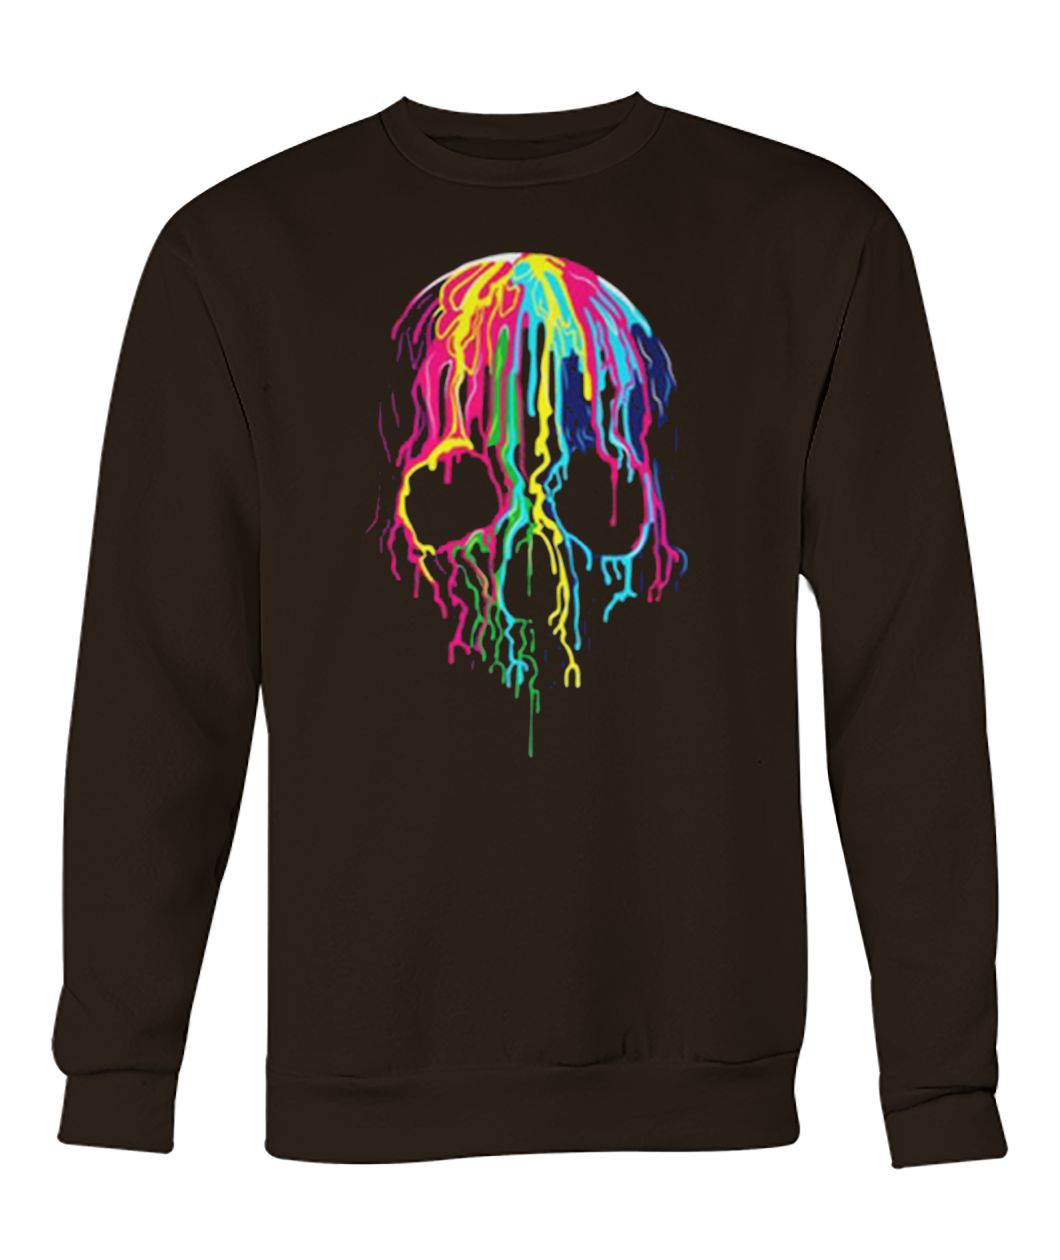 Colorful melting skull art graphic halloween crew neck sweatshirt